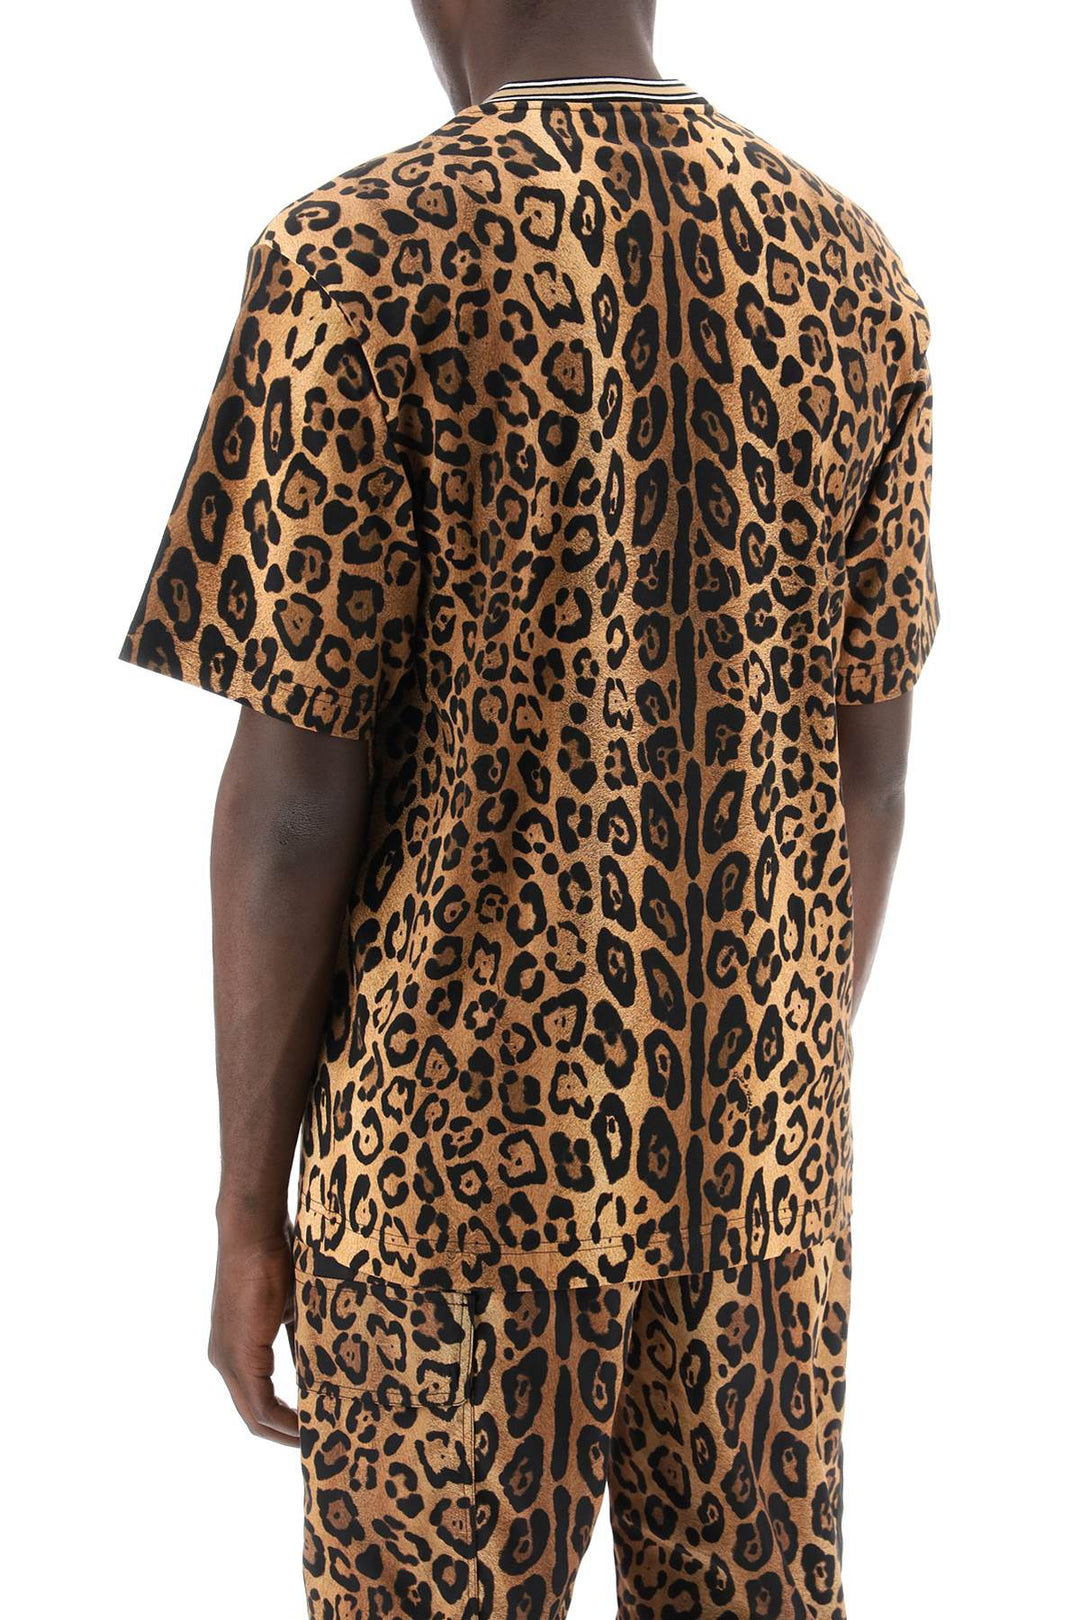 Dolce & gabbana leopard print t-shirt with-2